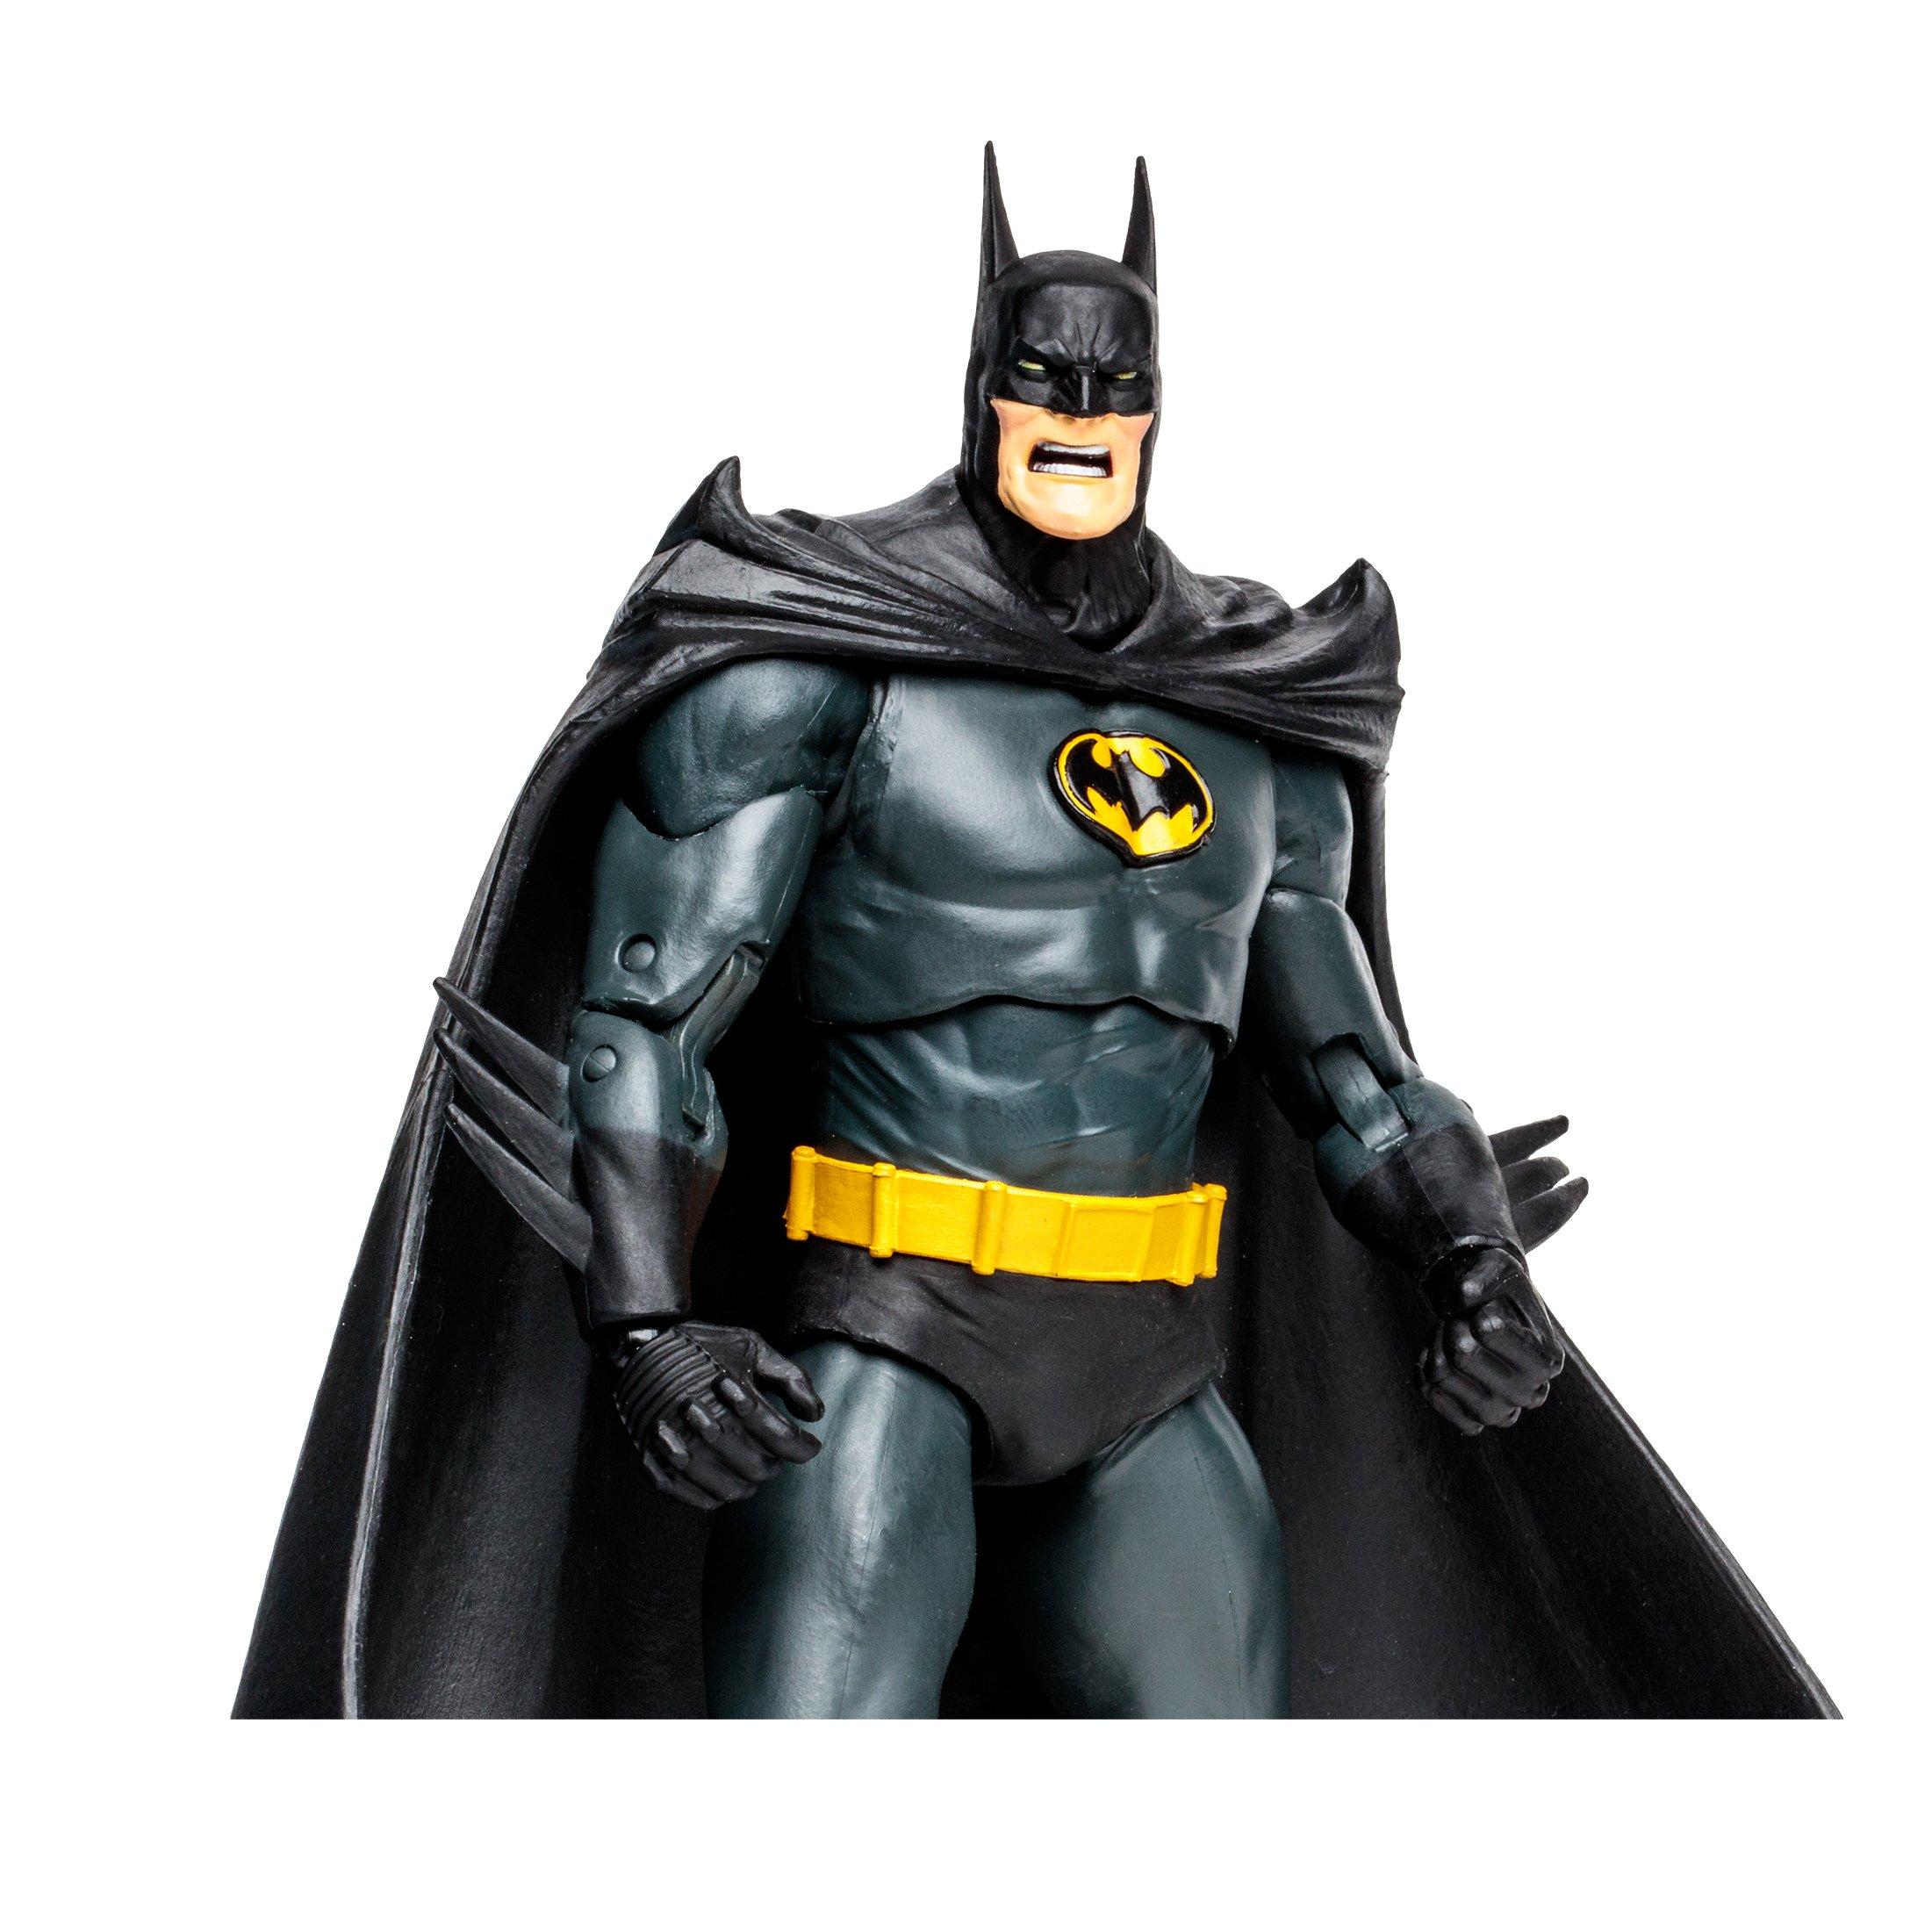 https://media.gamestop.com/i/gamestop/20004957_ALT03/McFarlane-Toys-DC-Multiverse-Batman-and-Spawn-Todd-McFarlane-Comics-7-in-Action-Figure-Set-2-Pack?$pdp$